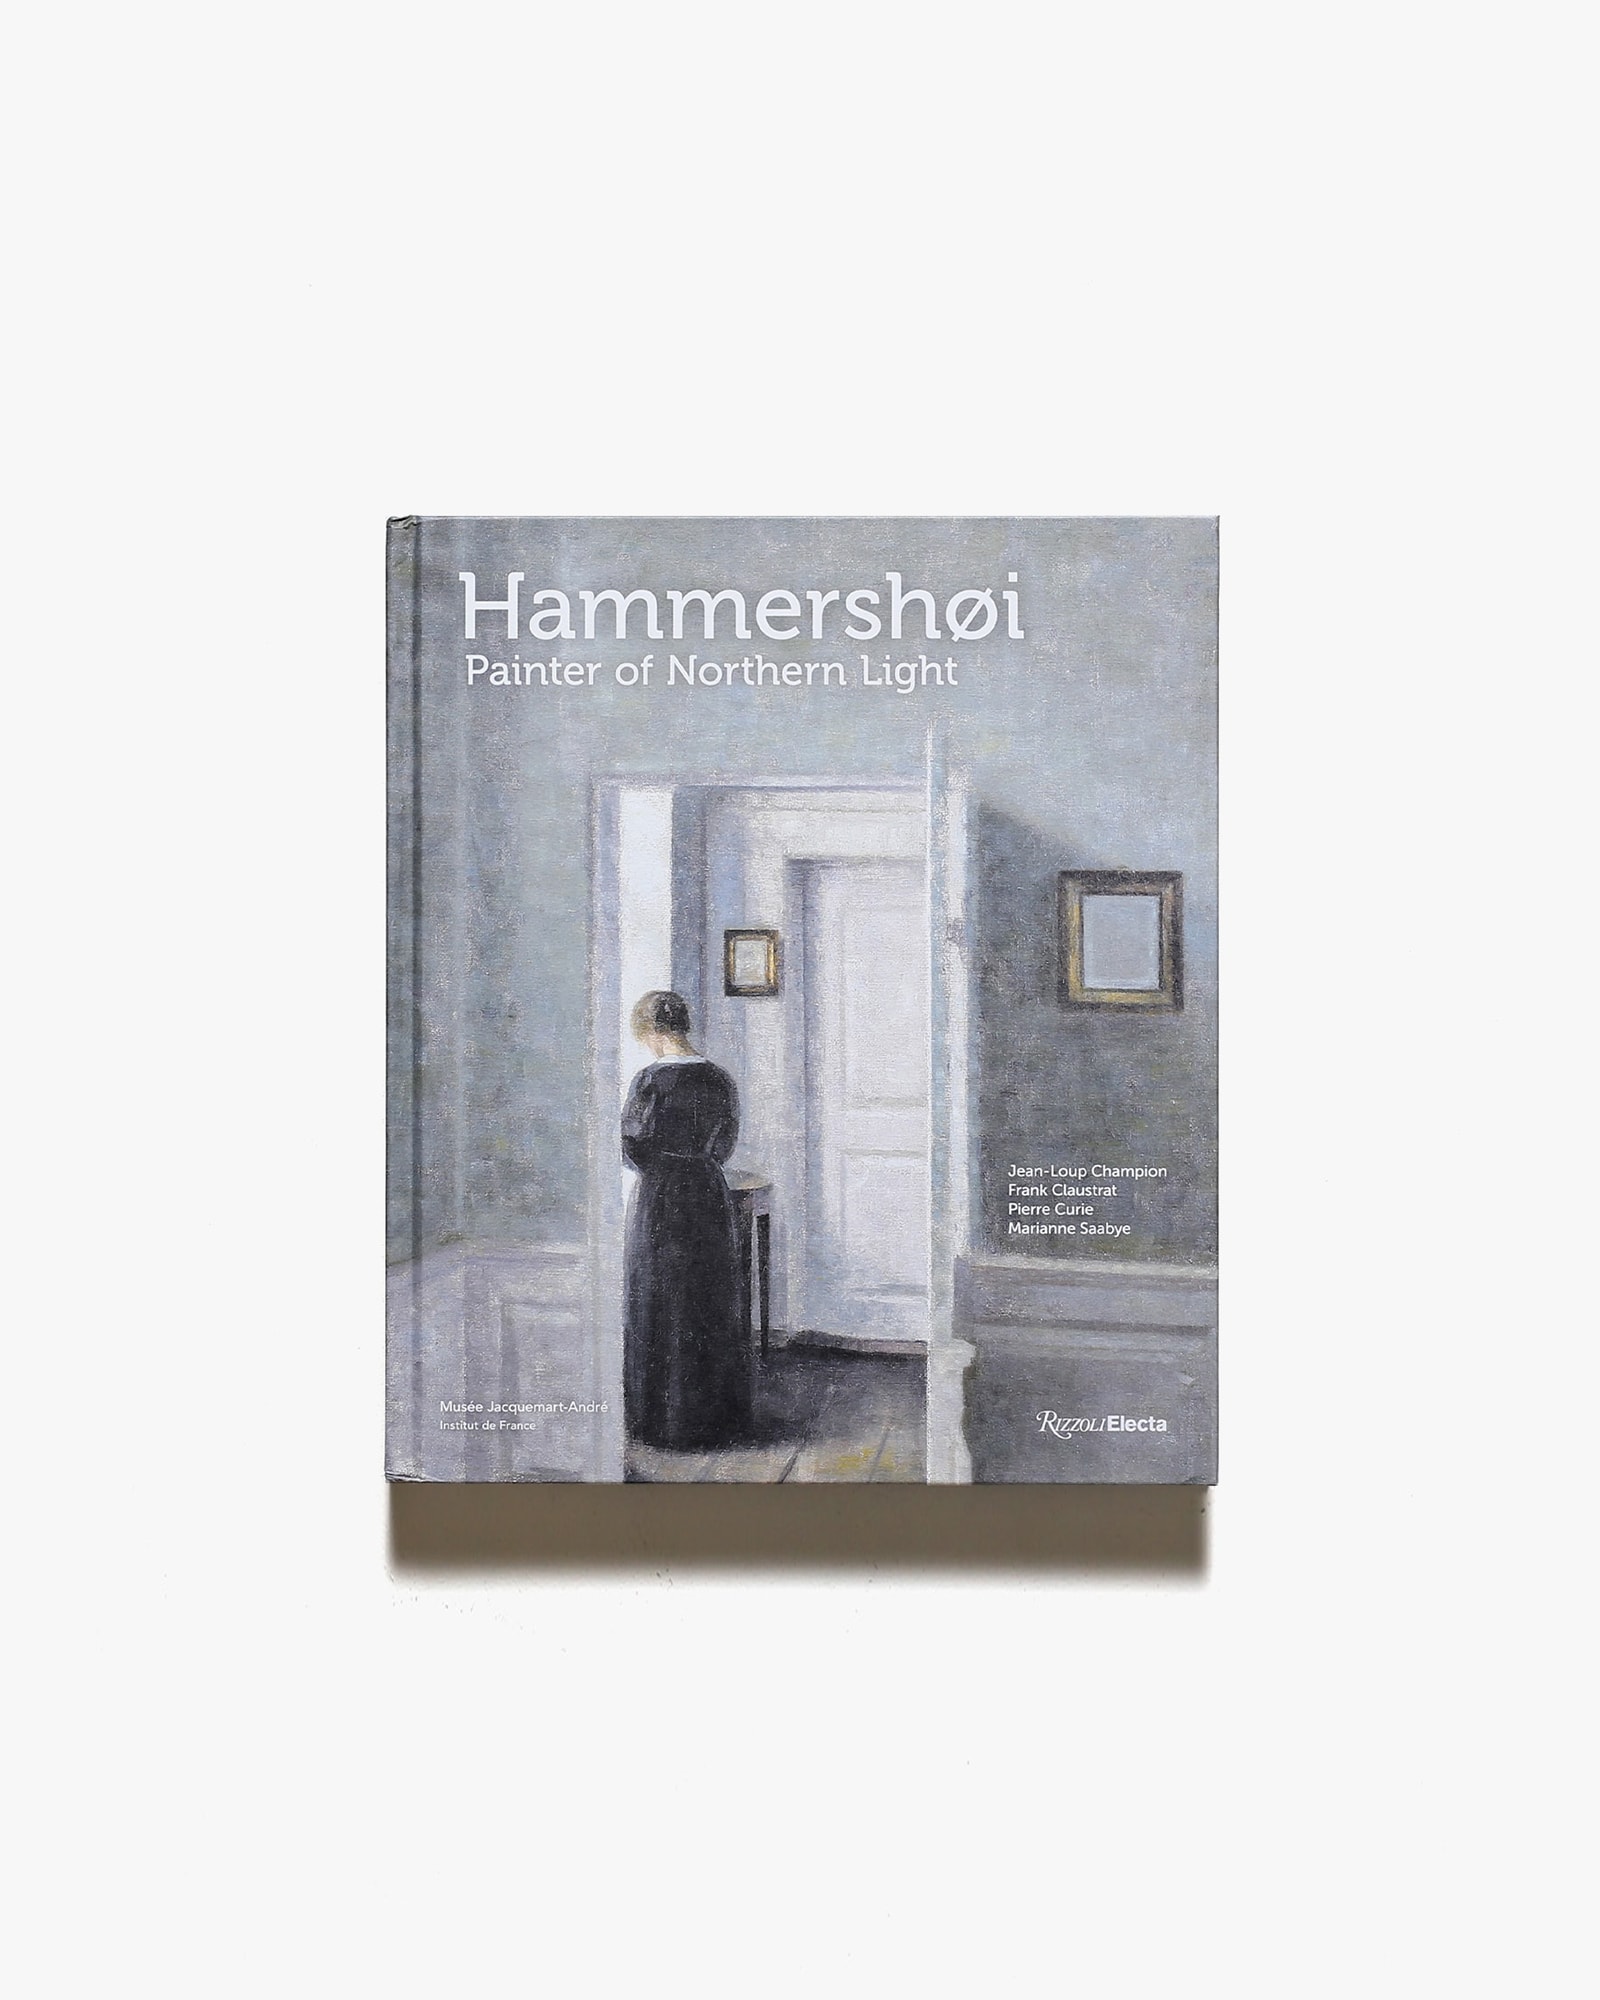 Hammershoi: Painter of Northern Light